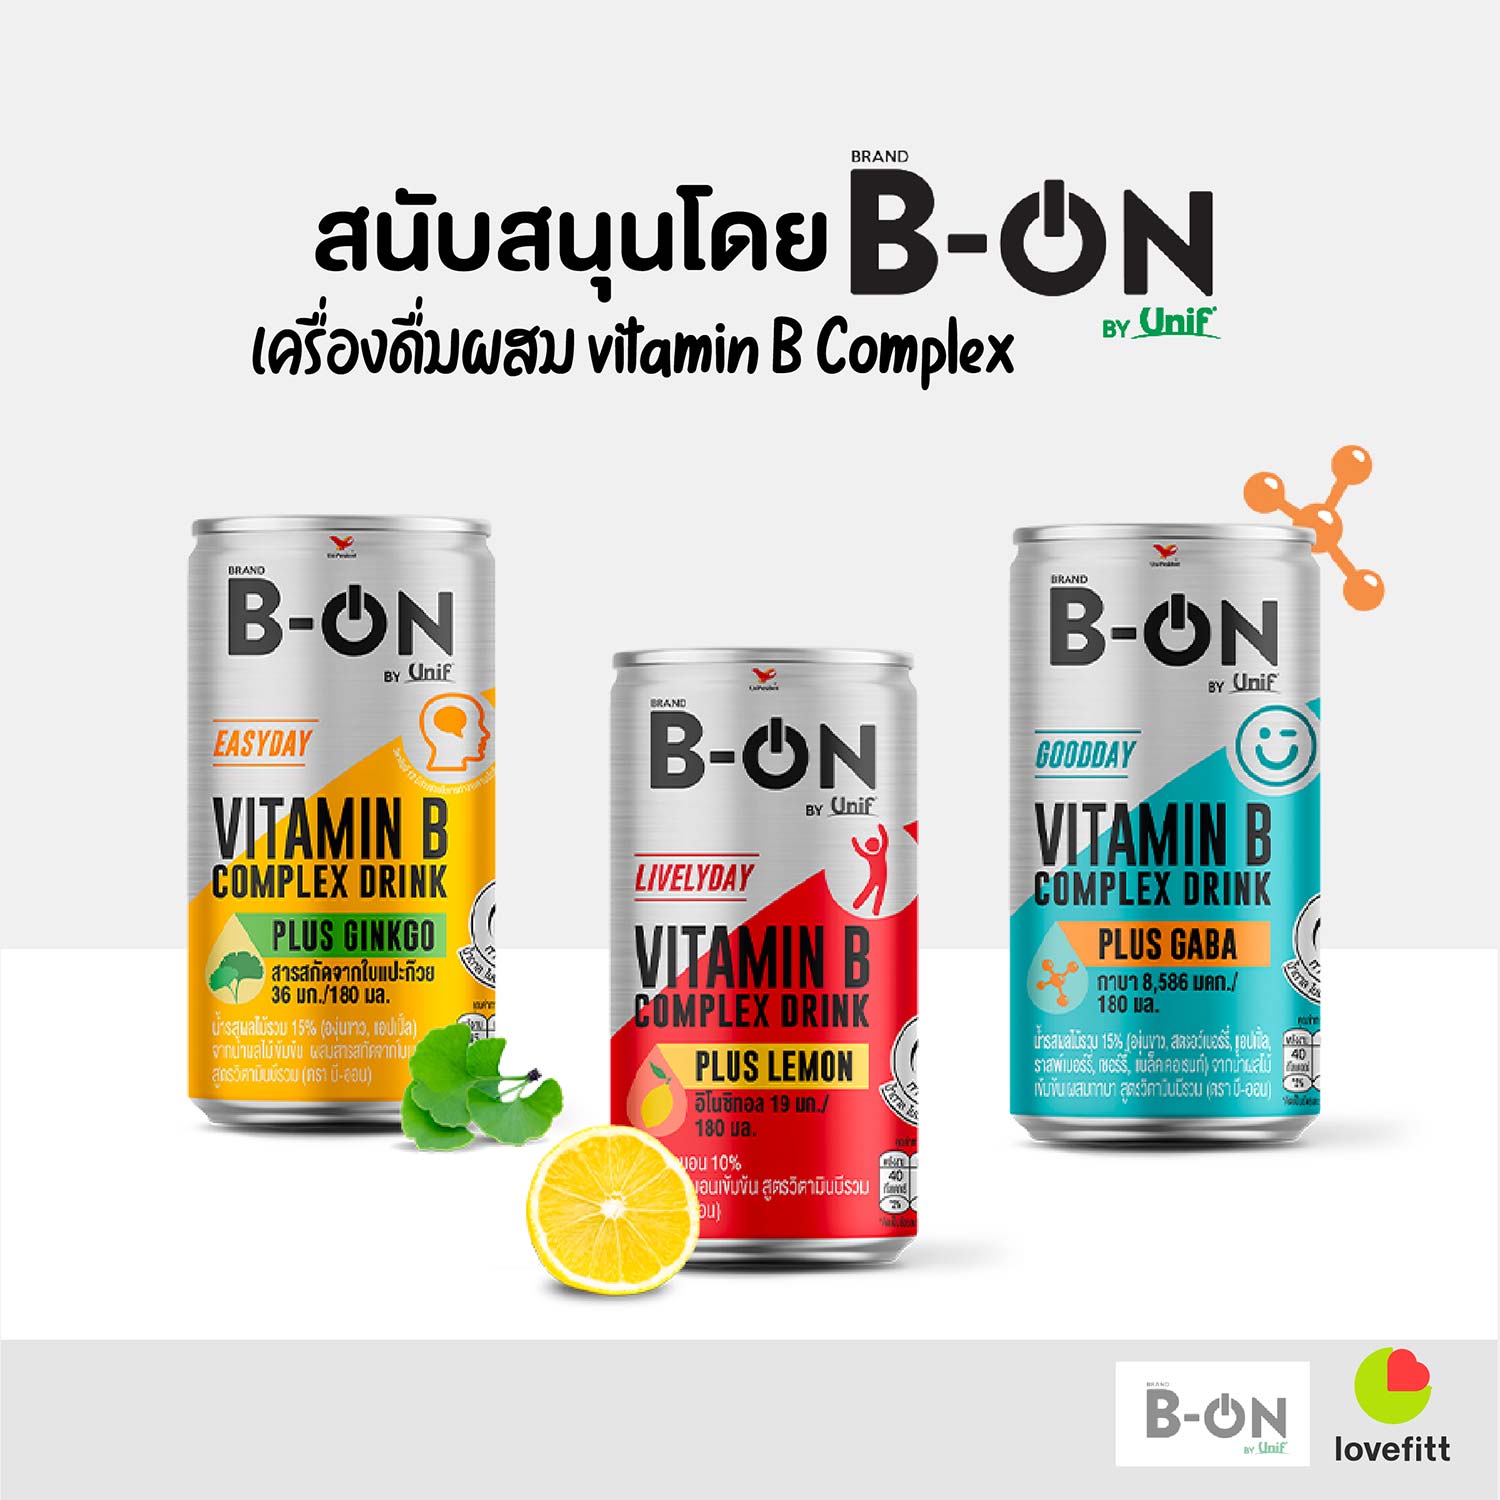 B-ON by Unif เครื่องดื่มผสม vitamin B Complex